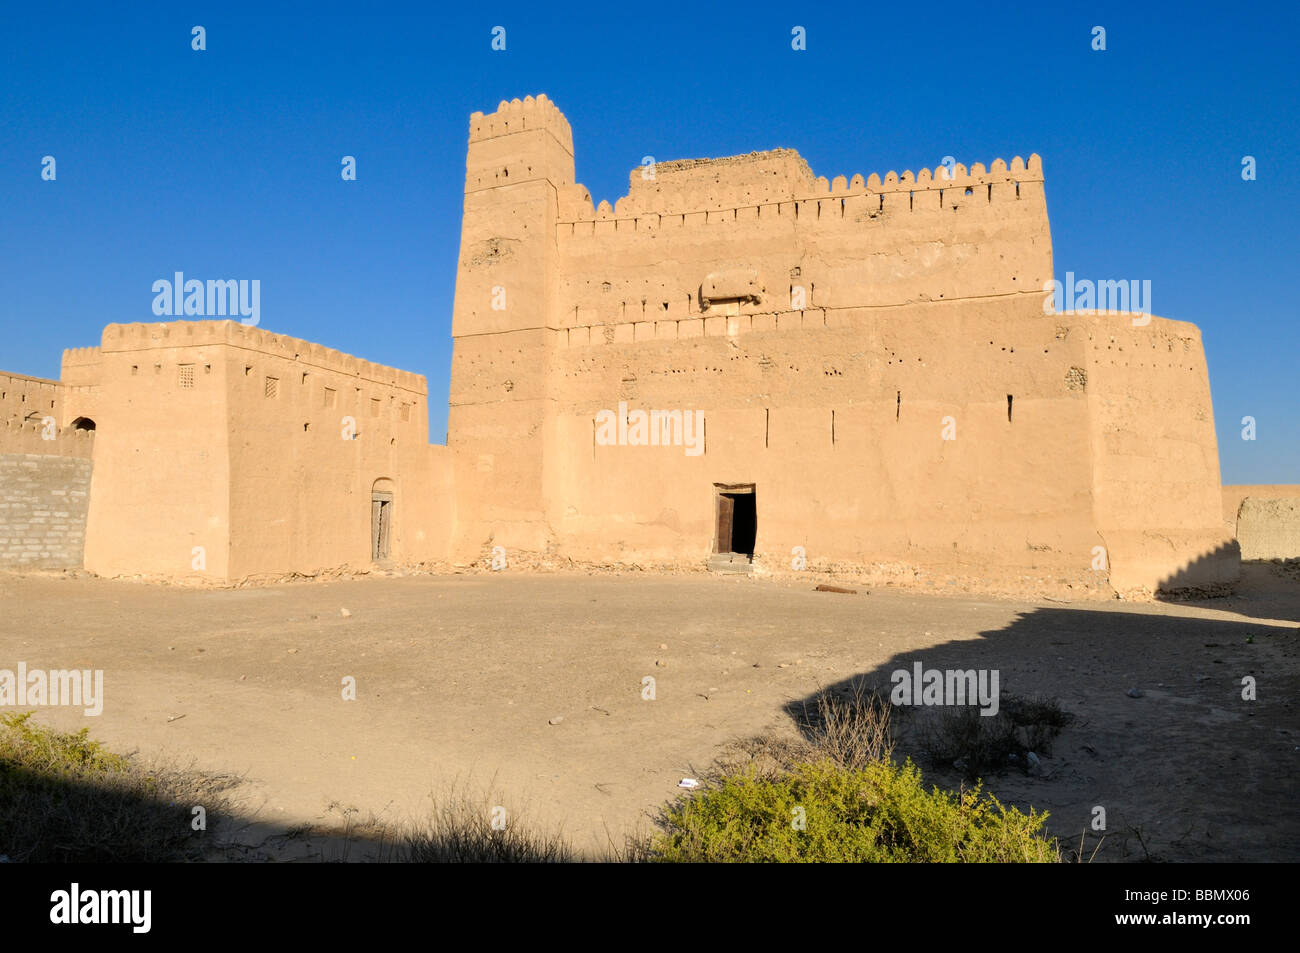 Historic adobe fortification of the Al Hamoda Sheiks, Jaalan Bani Bu Ali Fort or Castle, Sharqiya Region, Sultanate of Oman, Ar Stock Photo